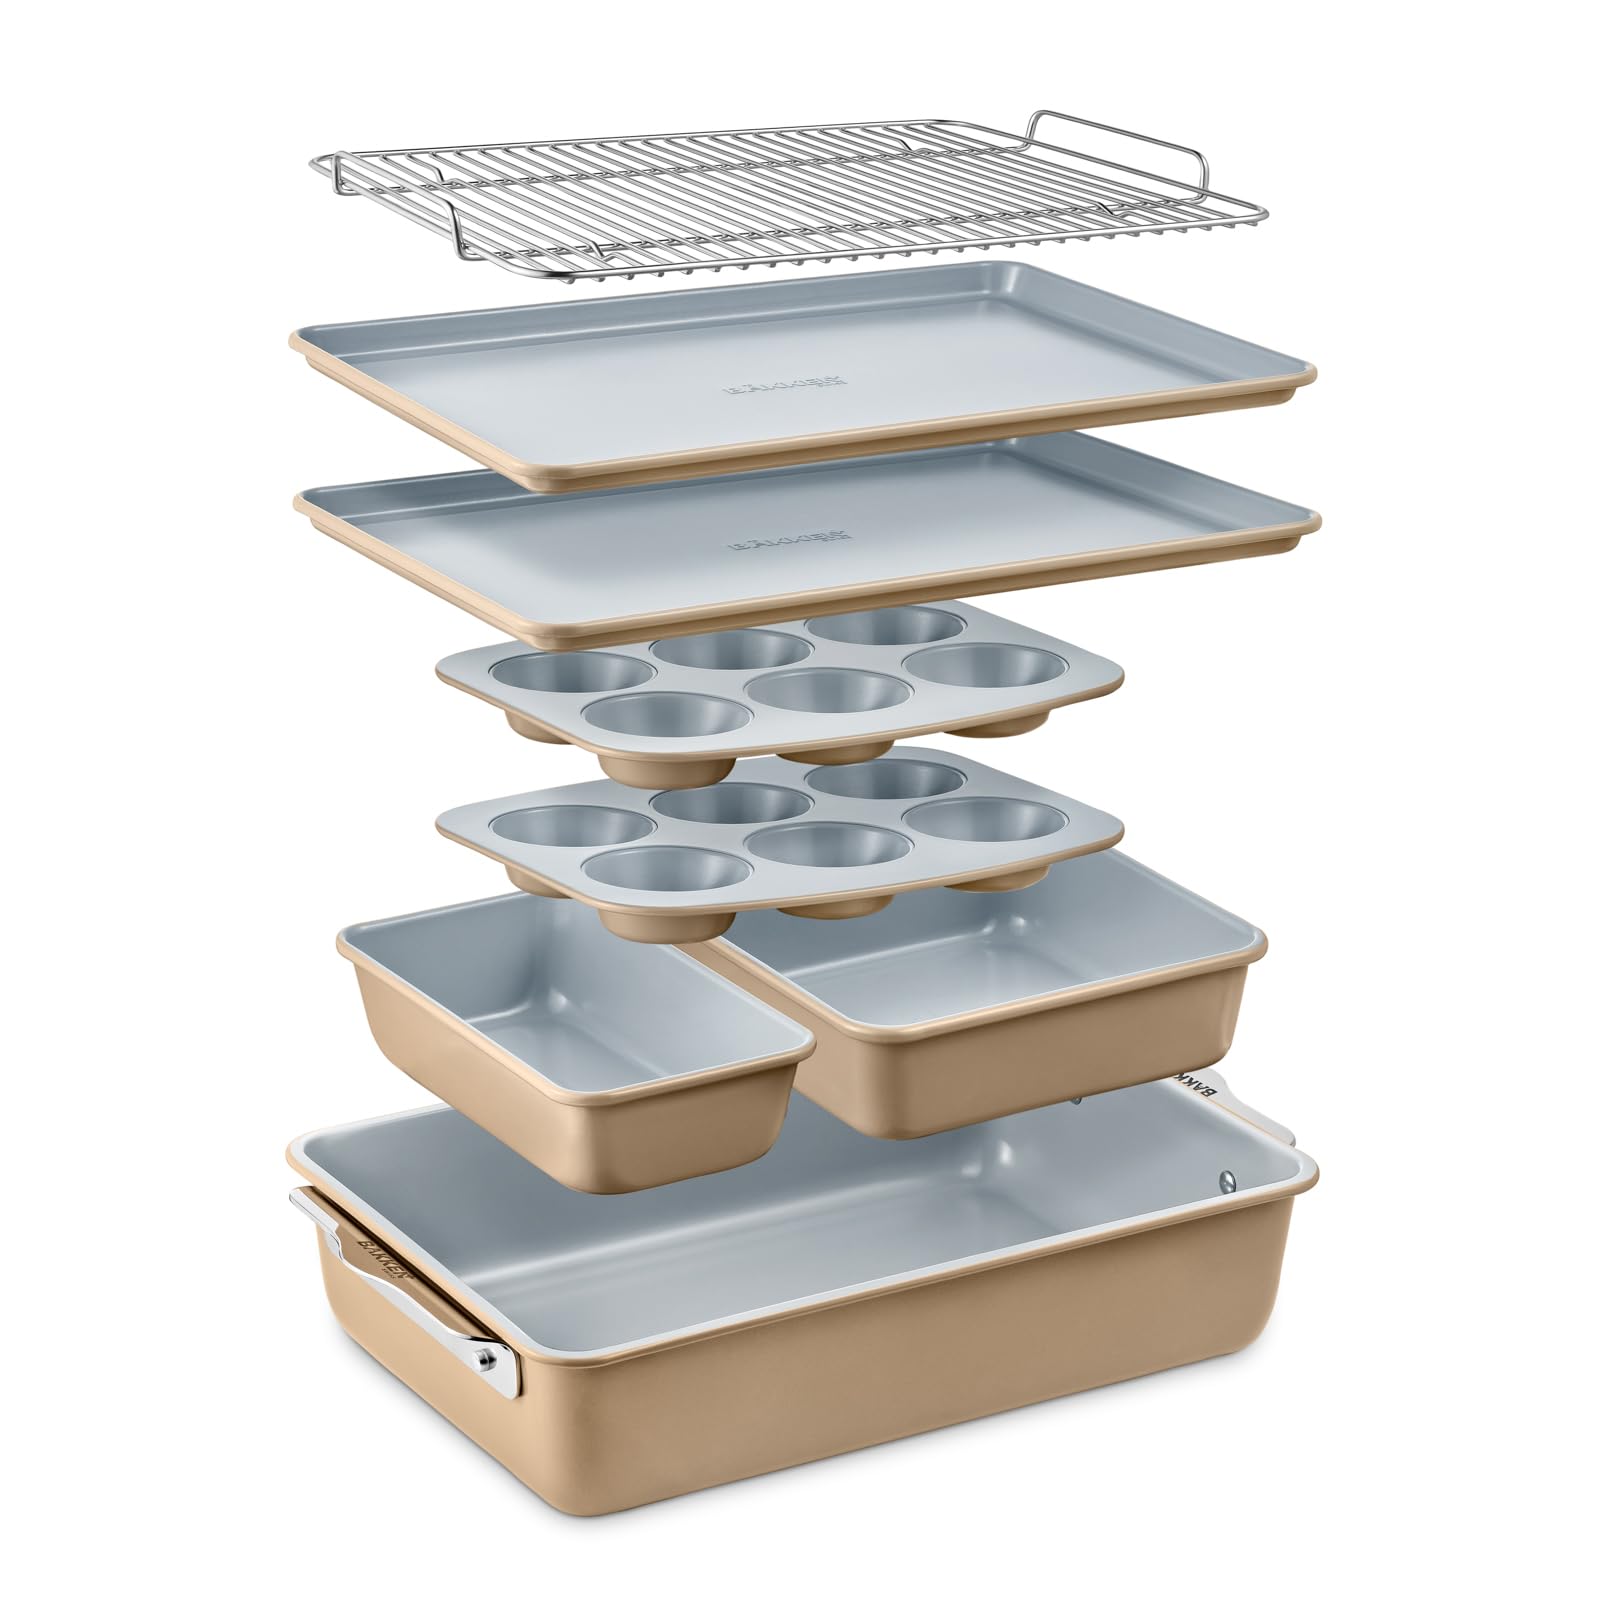 Bakken 8-Piece Stackable Bakeware Set - Aluminized Steel with Ceramic Non-Stick Coating, PFOA & PFAS Free - Healthy Baking, Ergonomic Handles, Cooling Rack, Non-Toxic, Oven-Safe, Durable Quality